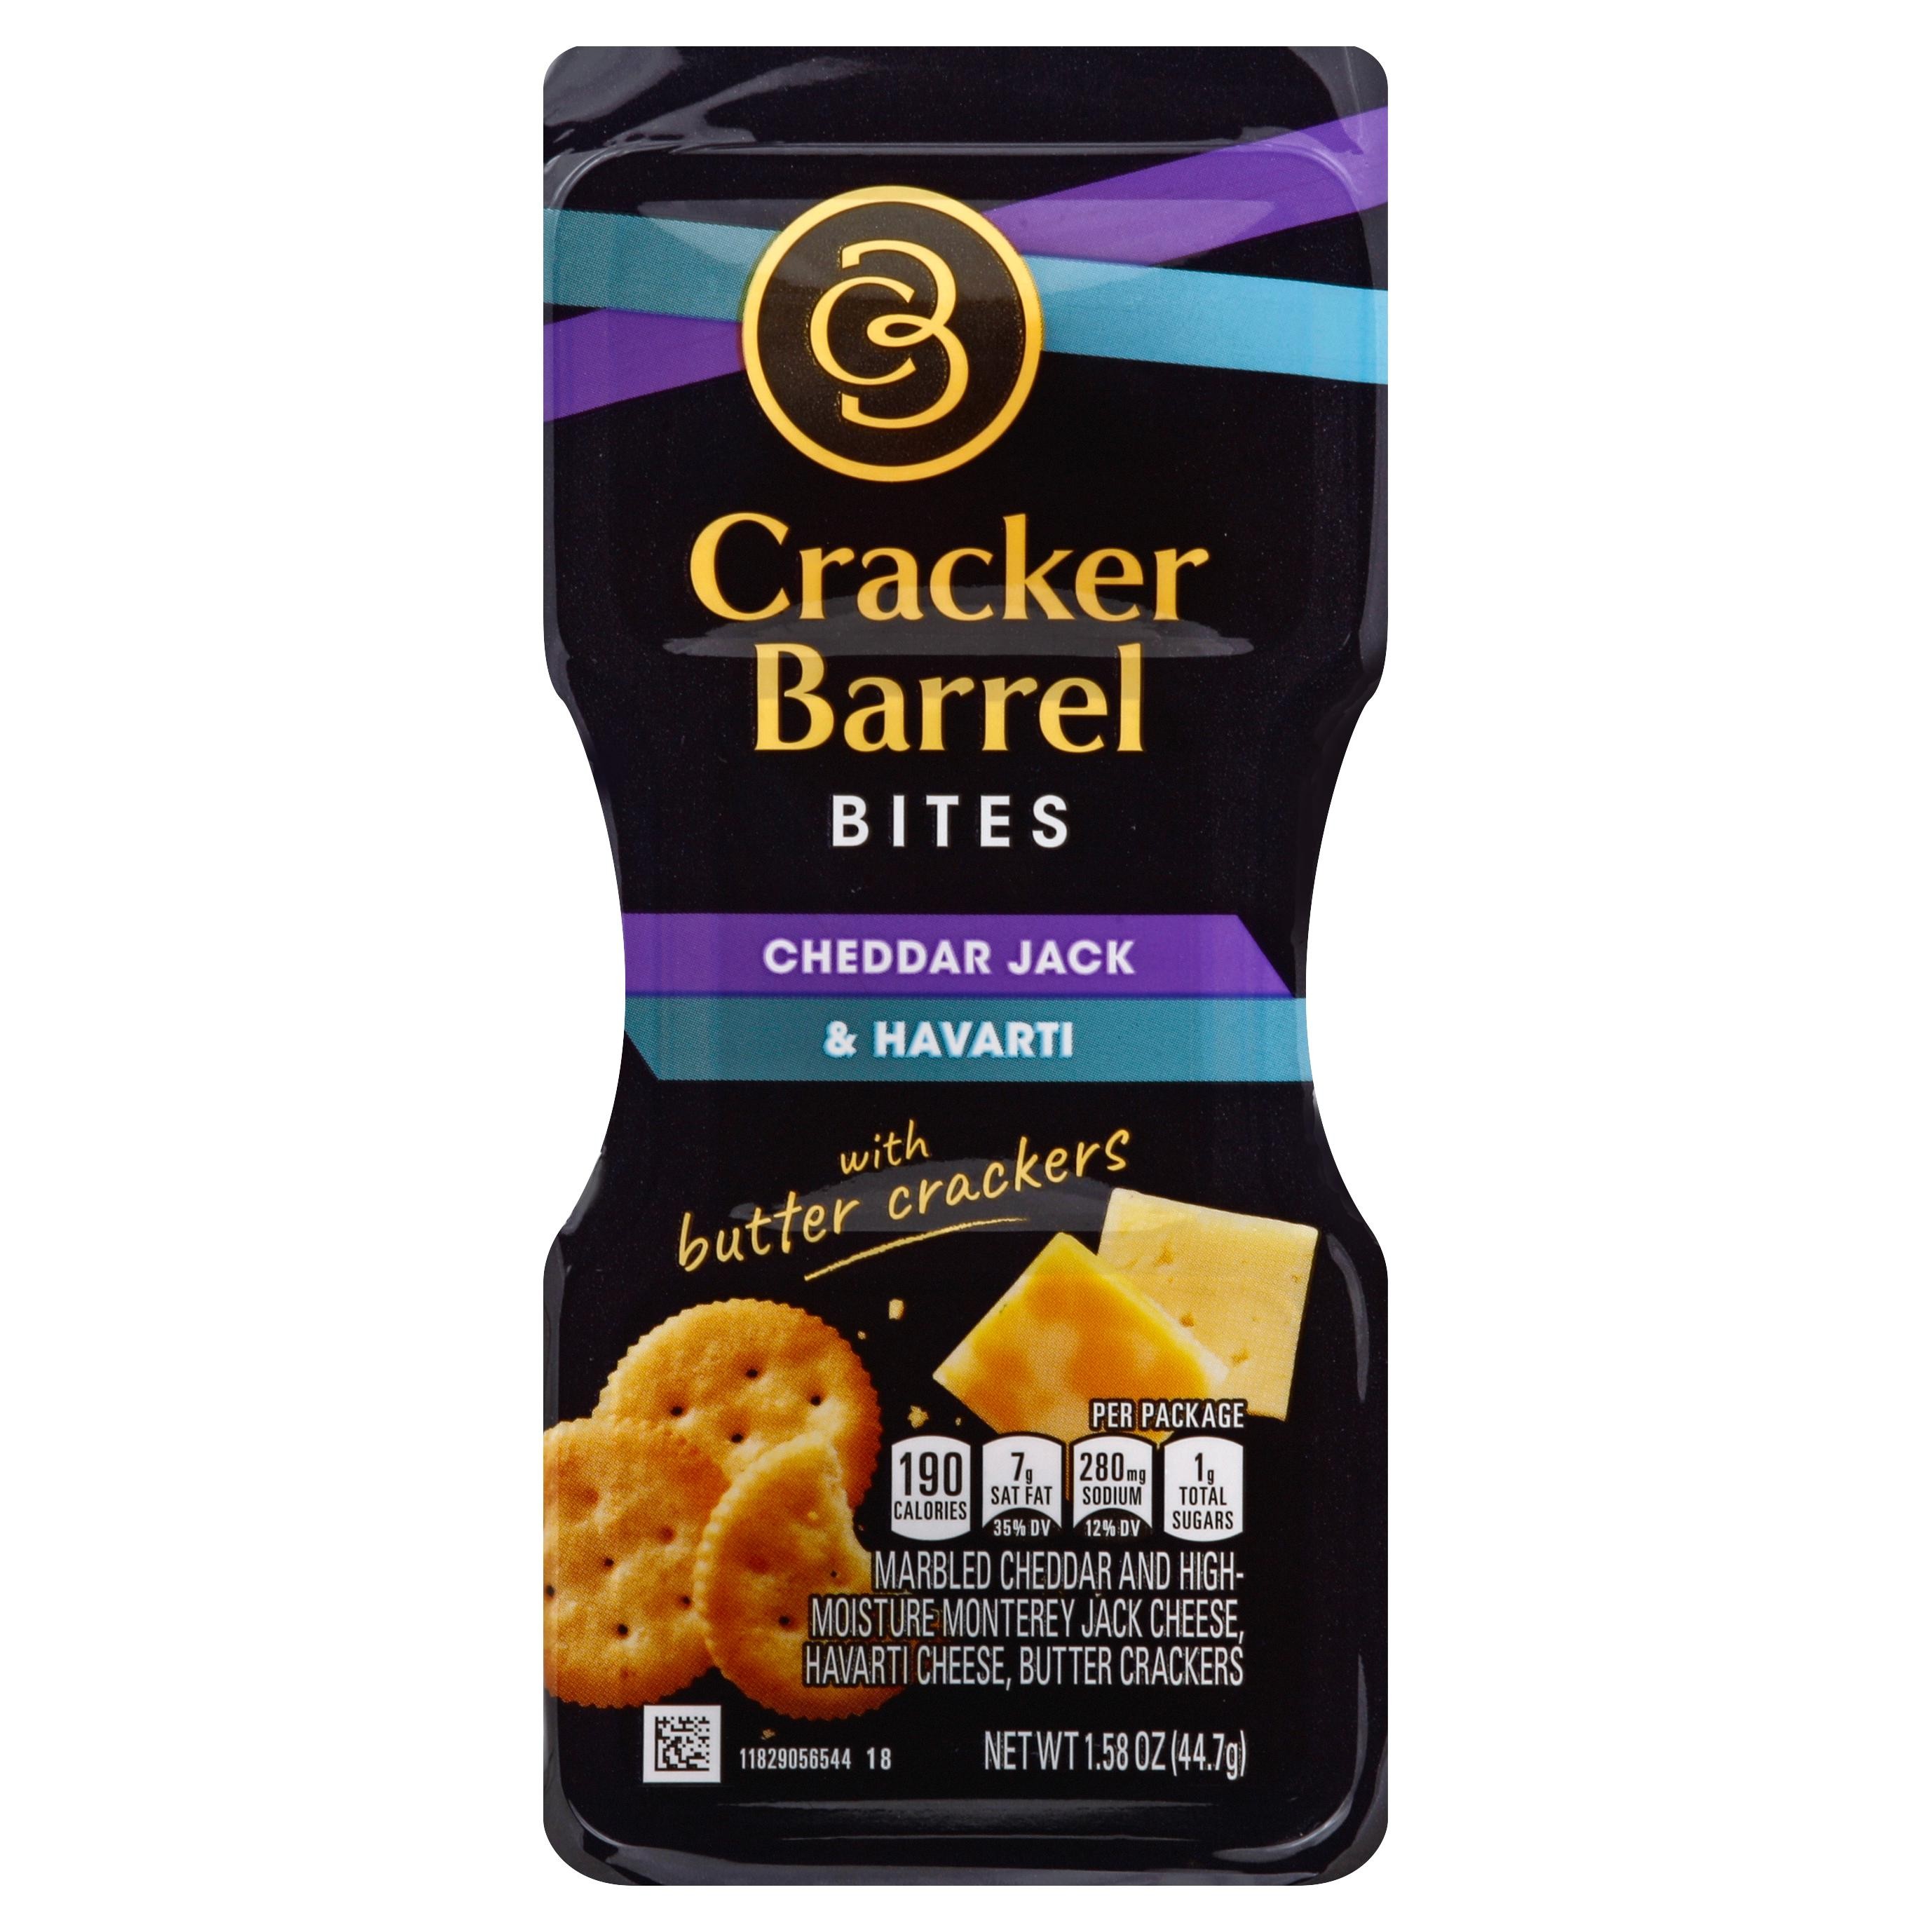 Cracker Barrel Bites, Cheddar Jack & Havarti Cheese With Crackers - 1.58 Oz